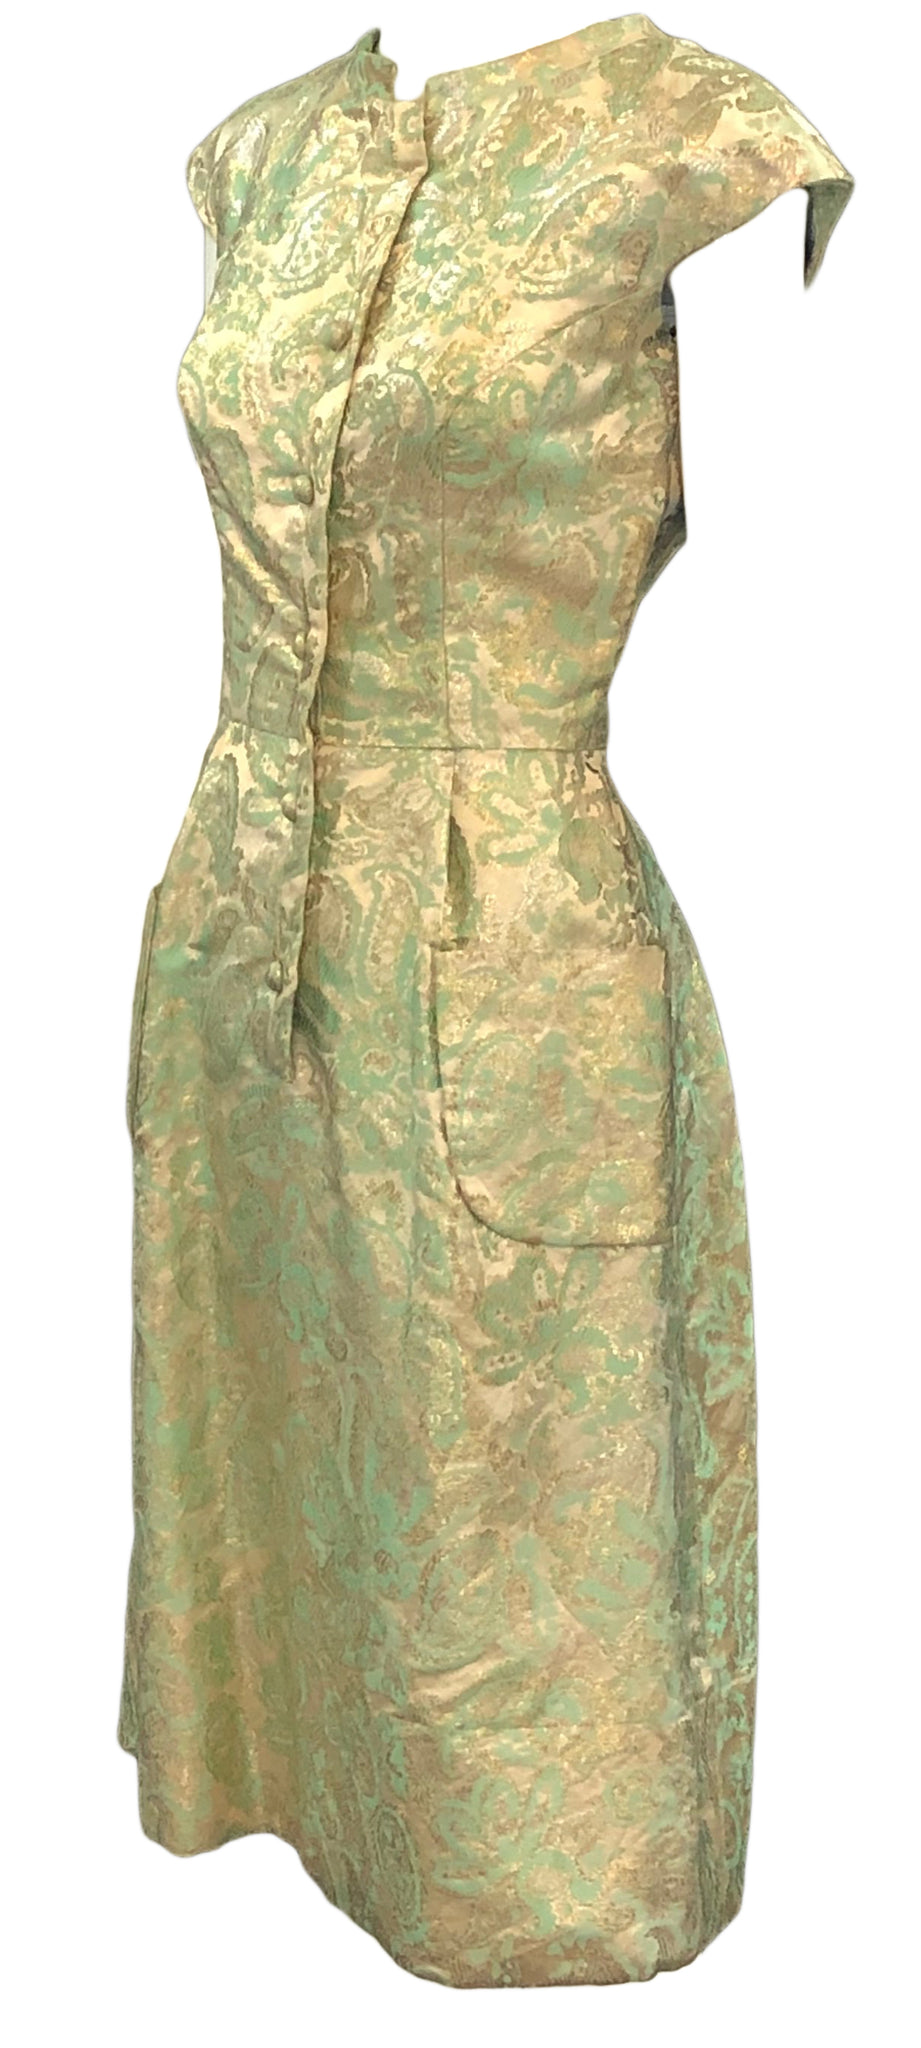 60's Metallic Green Jacquard Dress, side